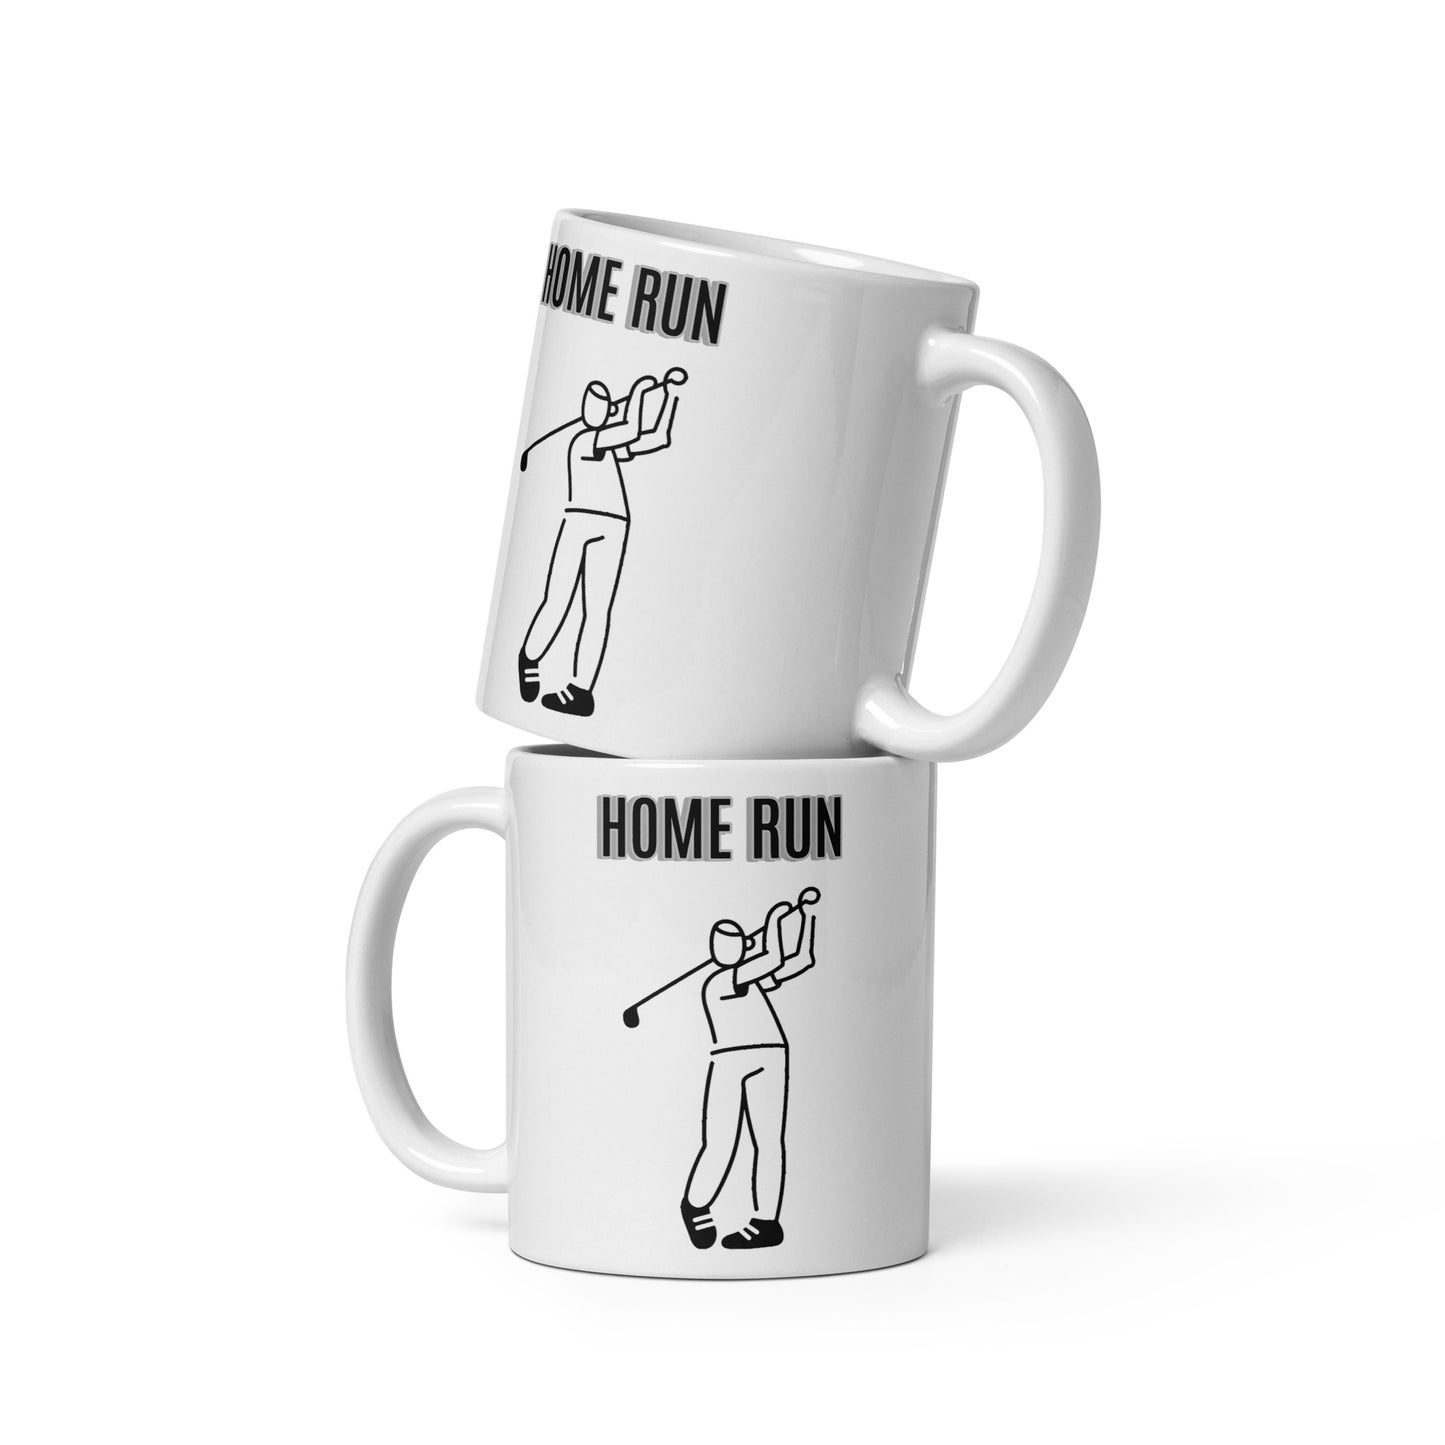 Home Run - Coffee Mug